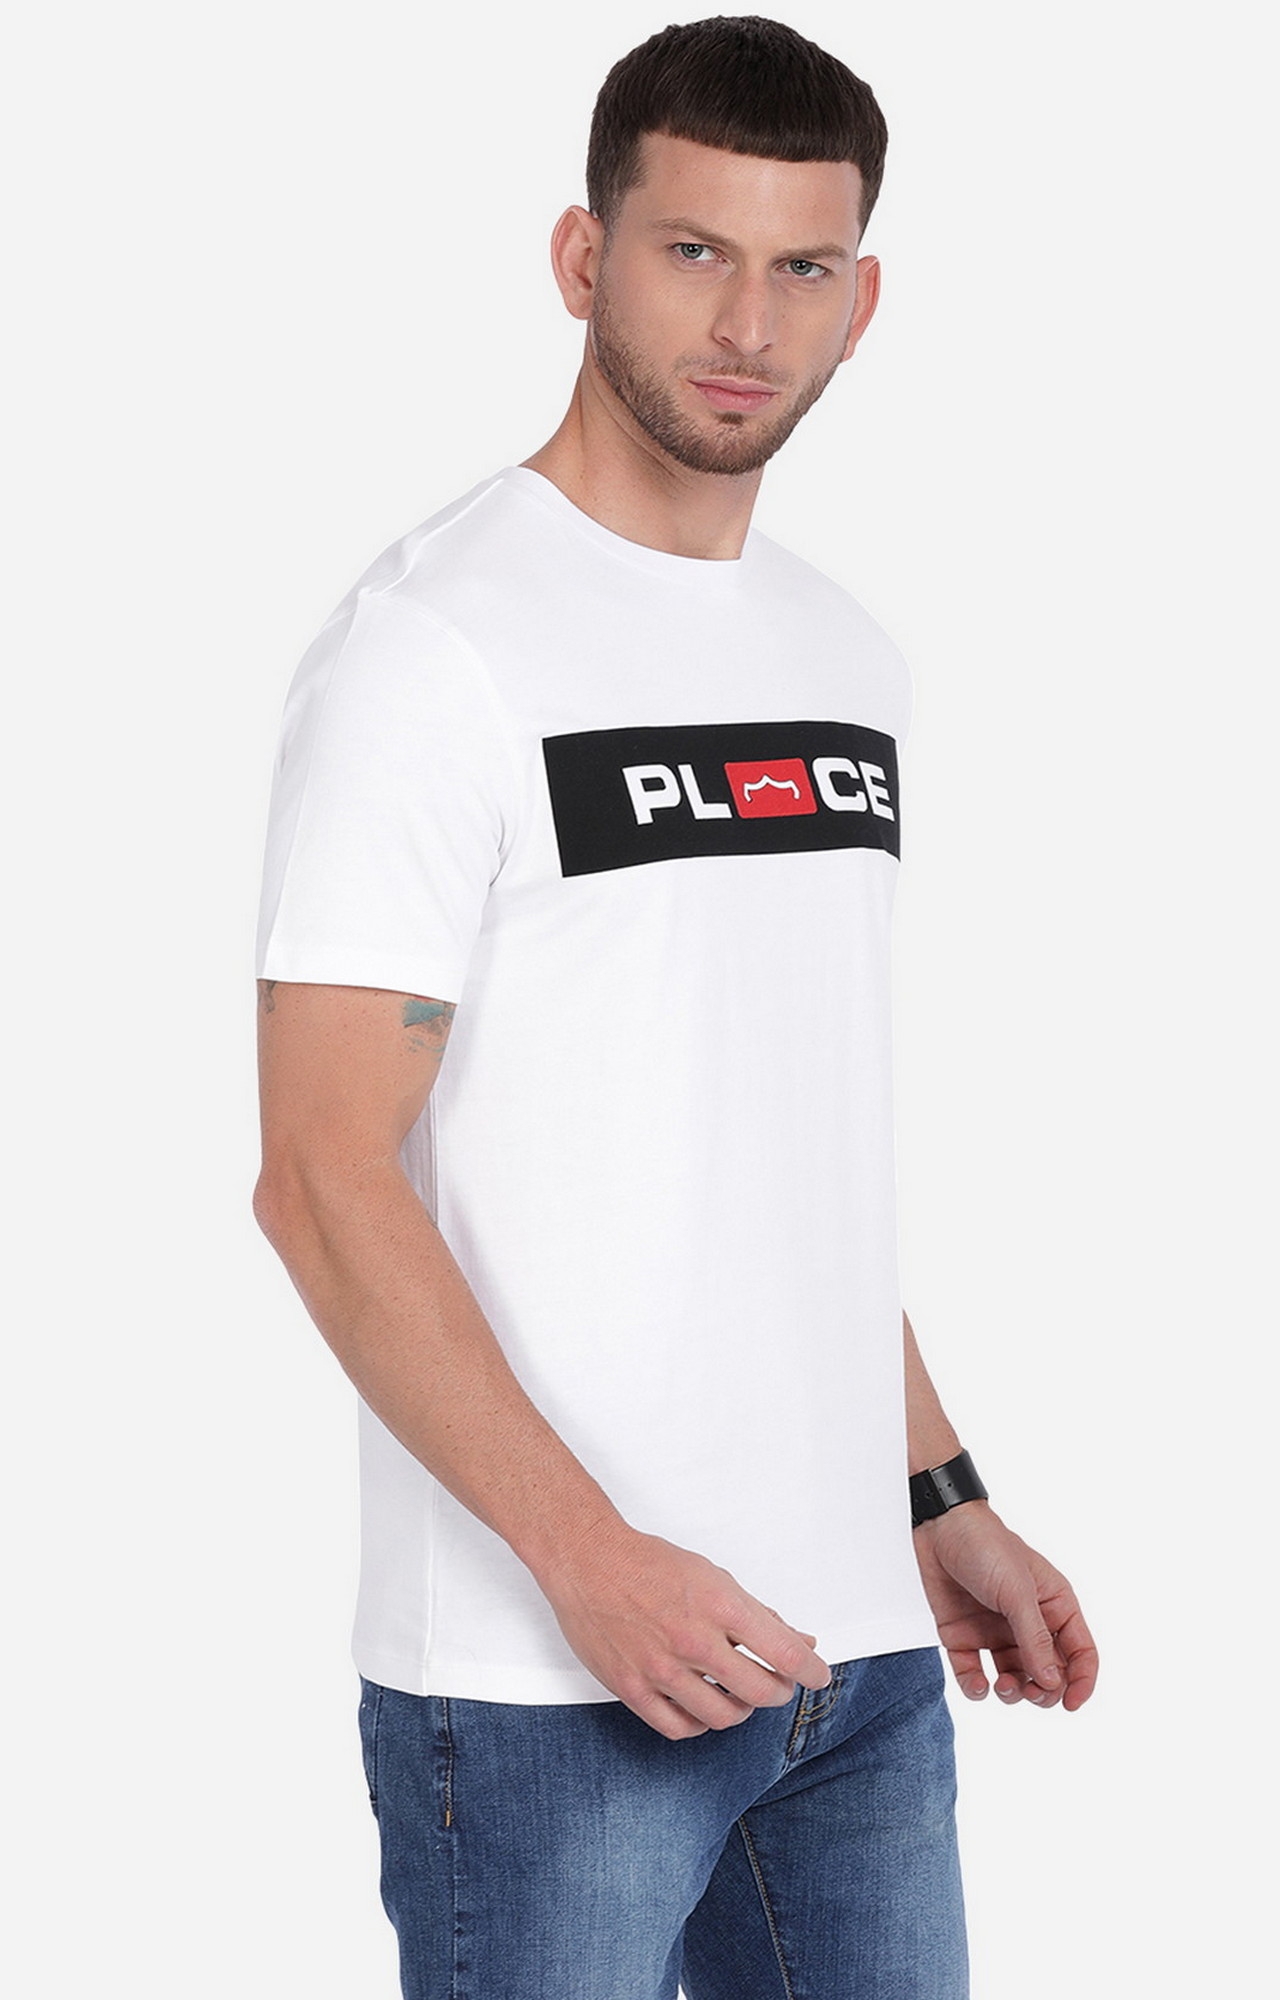 883 Police | Men's White Cotton Typographic Printed T-Shirt 4